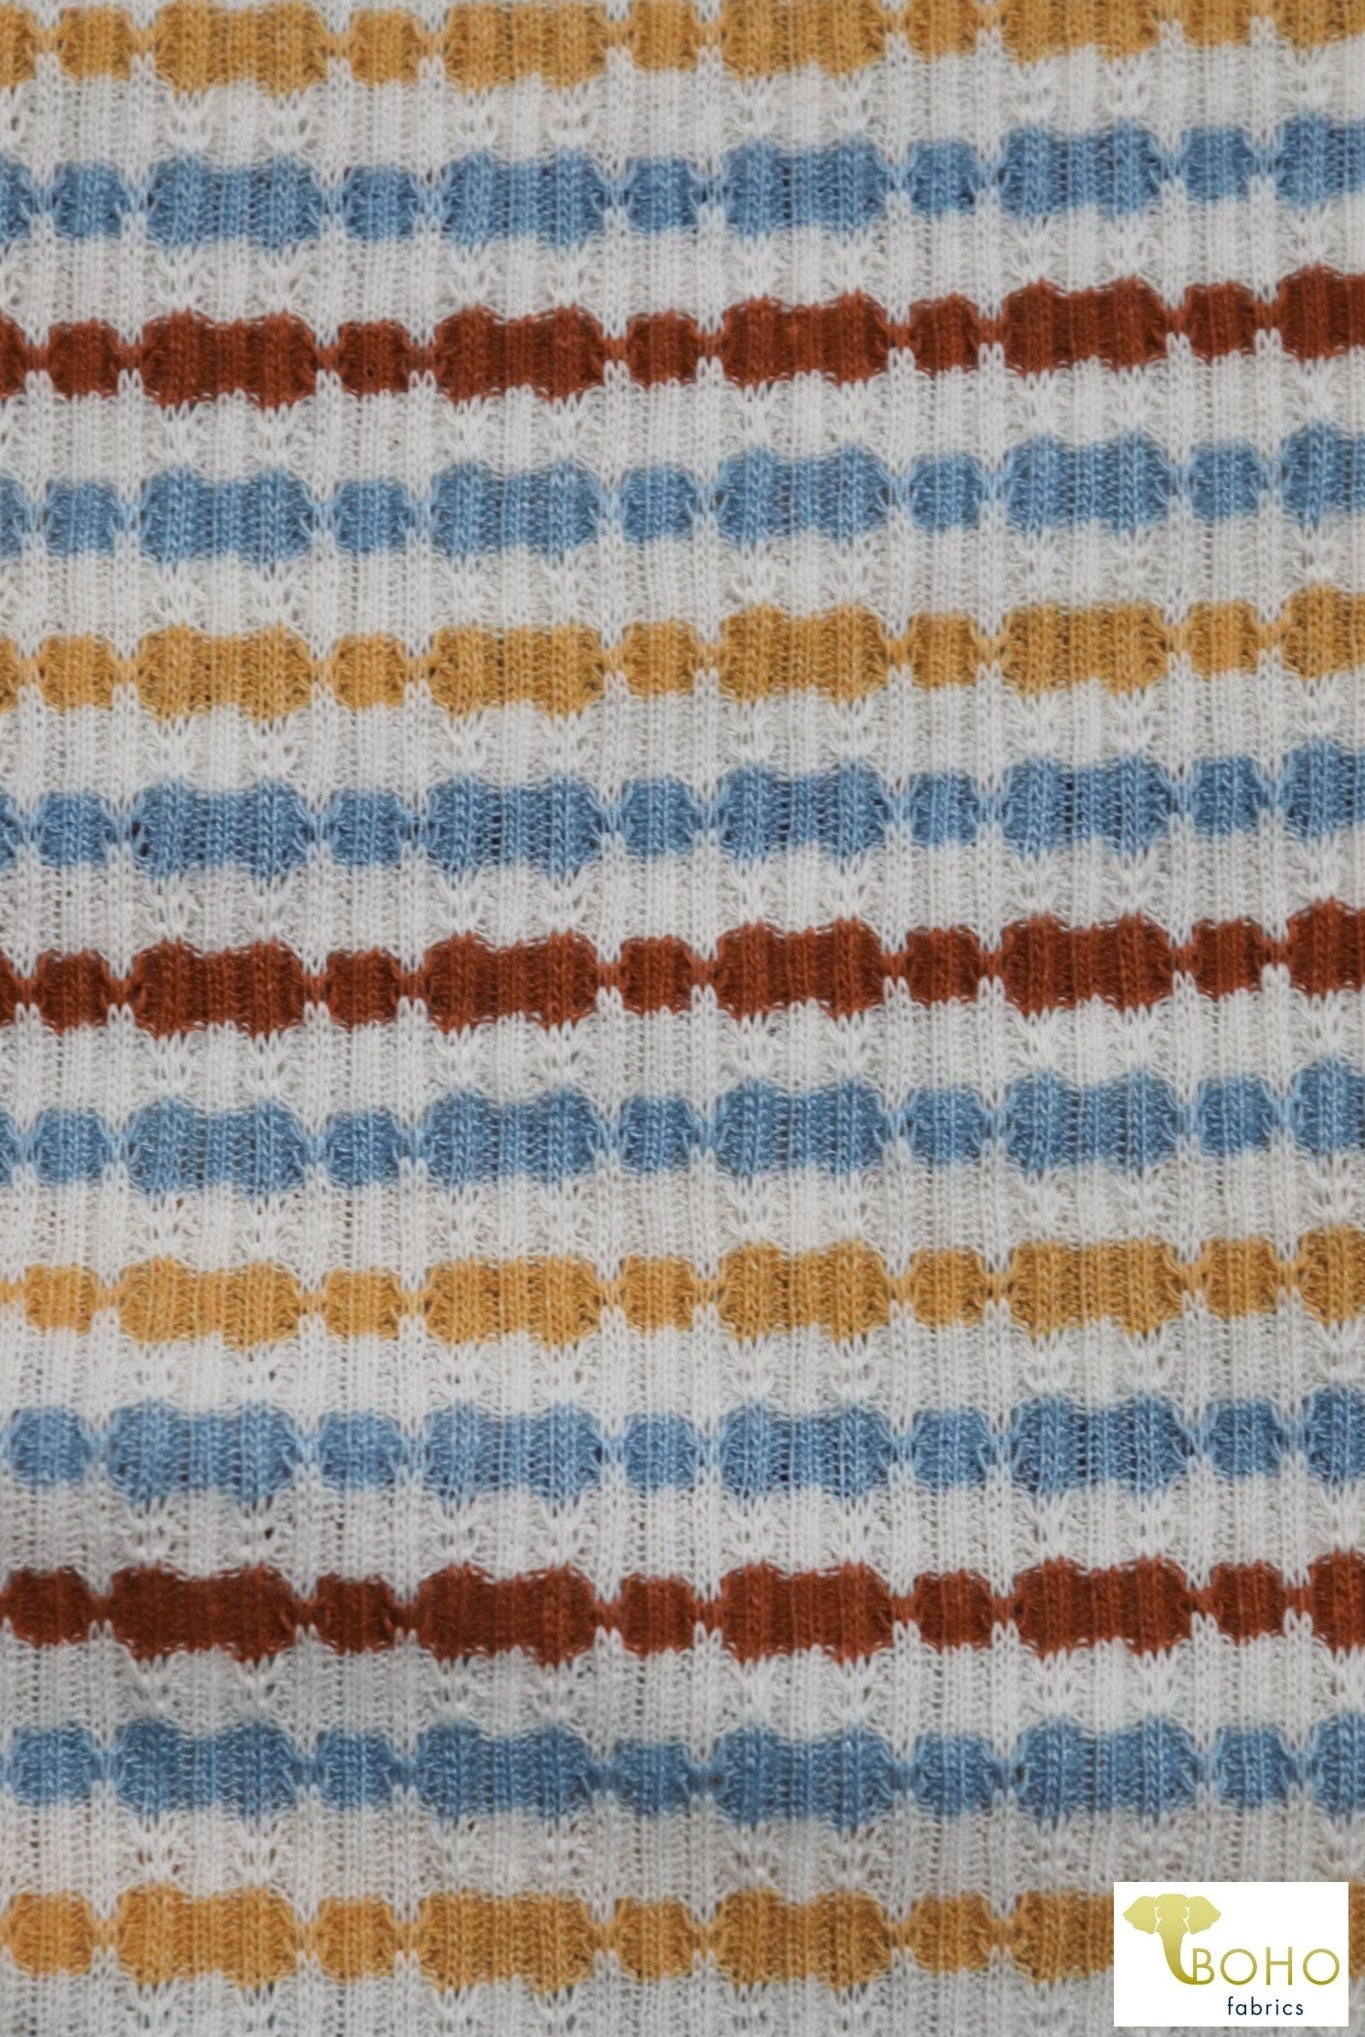 Gold/Blue/Copper Pointelle Rib Knit Fabric. RIB-115 - Boho Fabrics